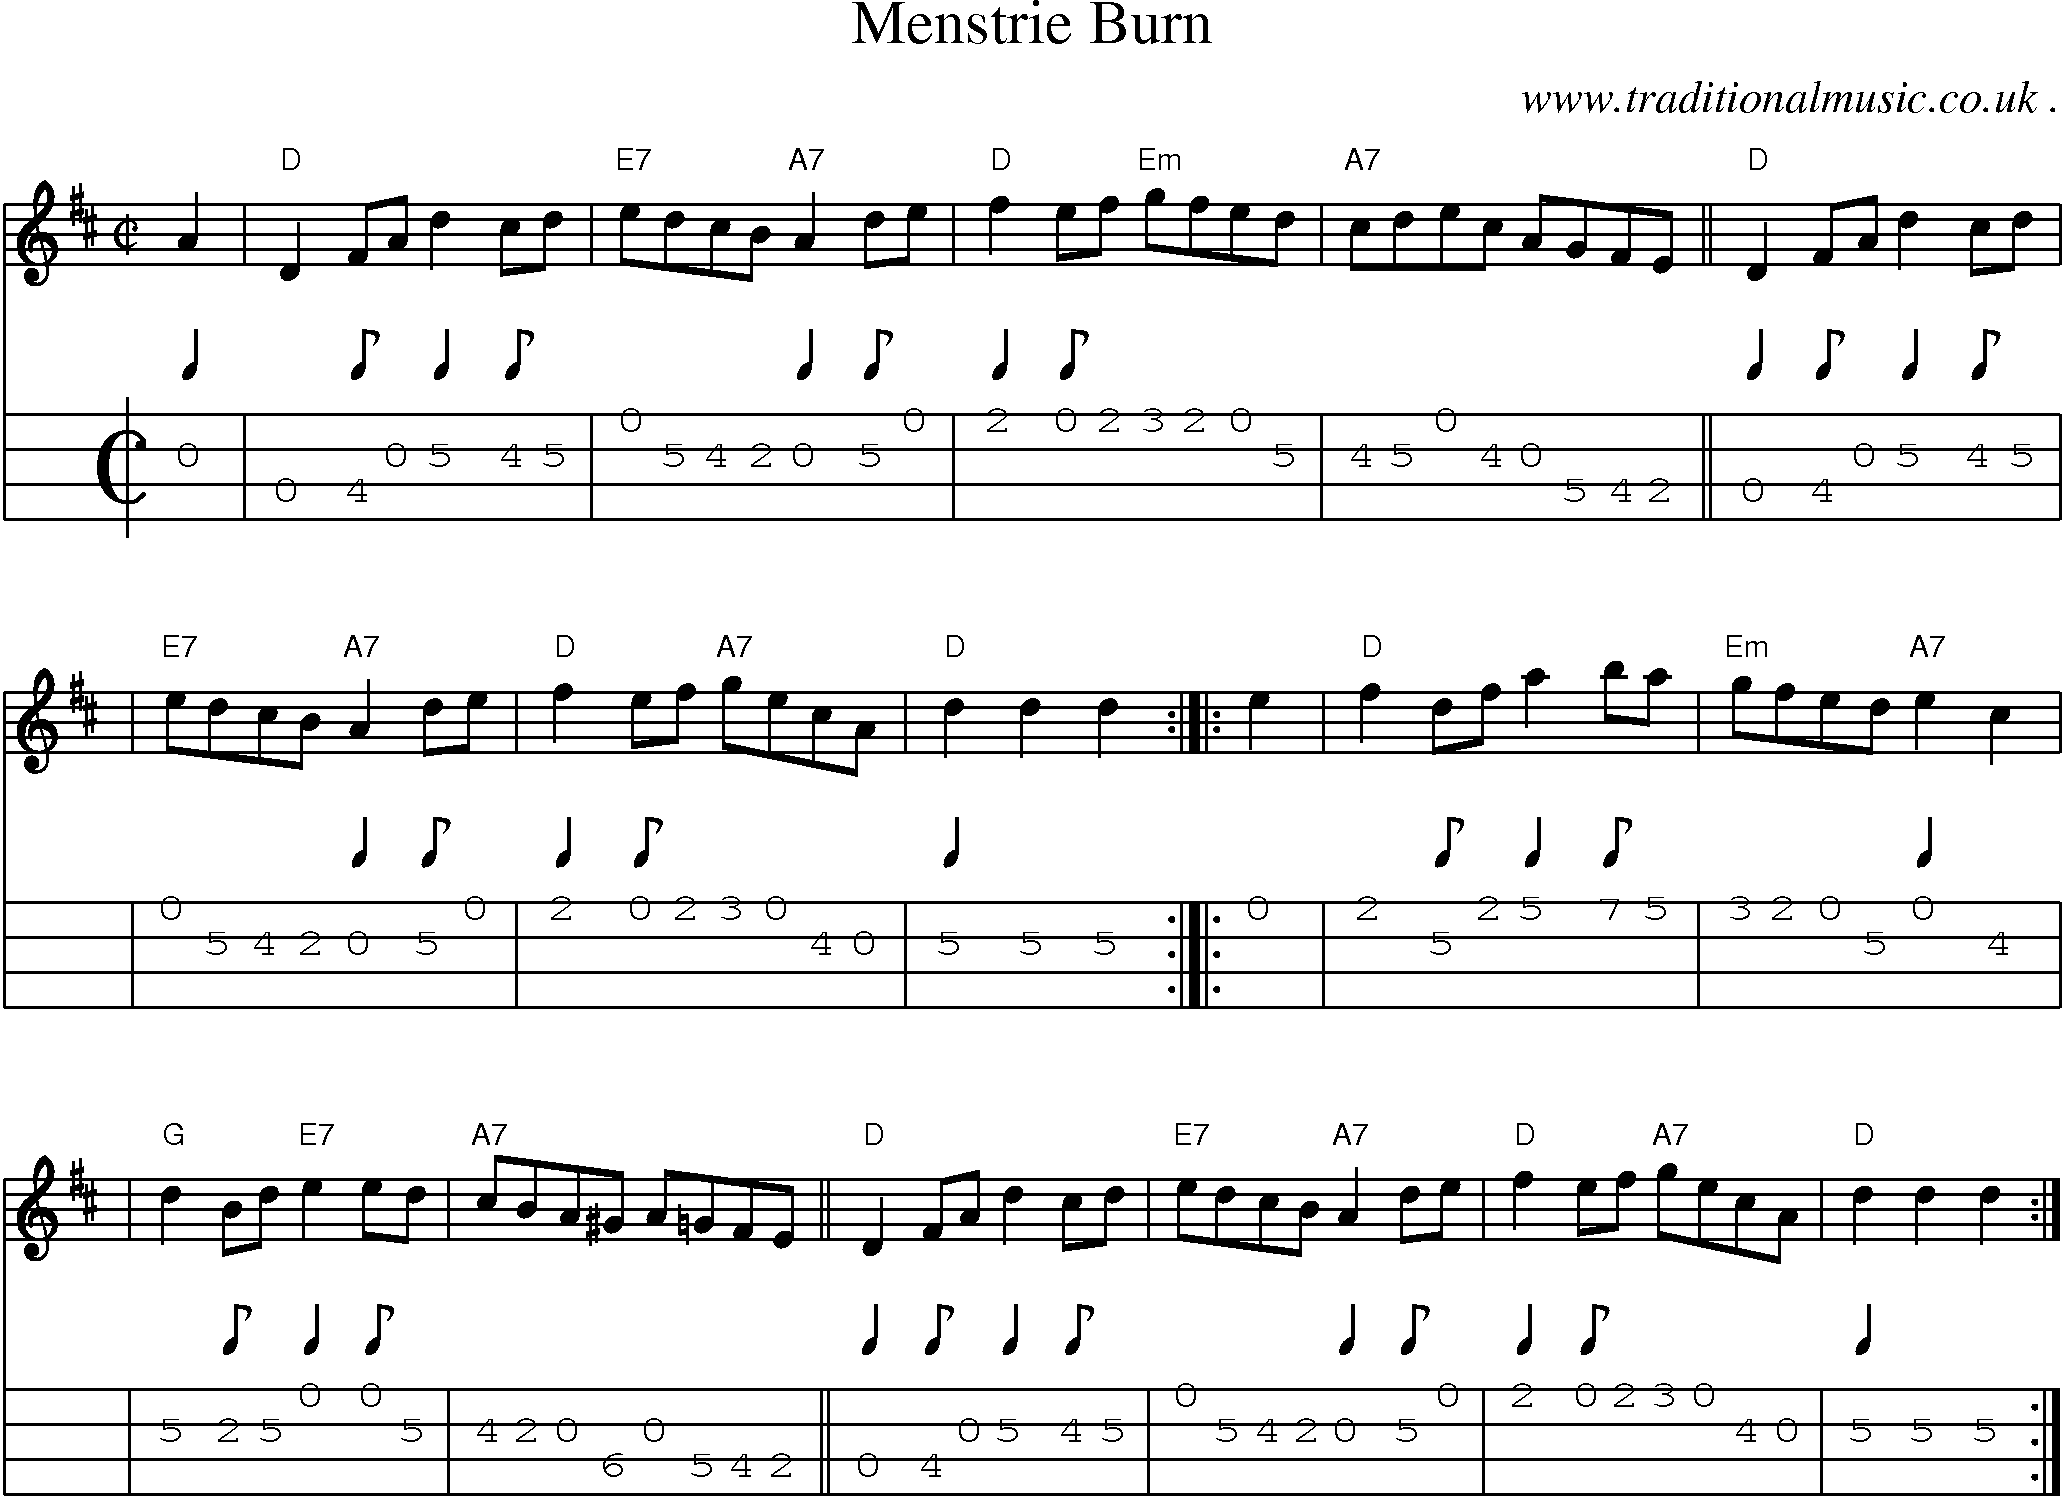 Sheet-music  score, Chords and Mandolin Tabs for Menstrie Burn